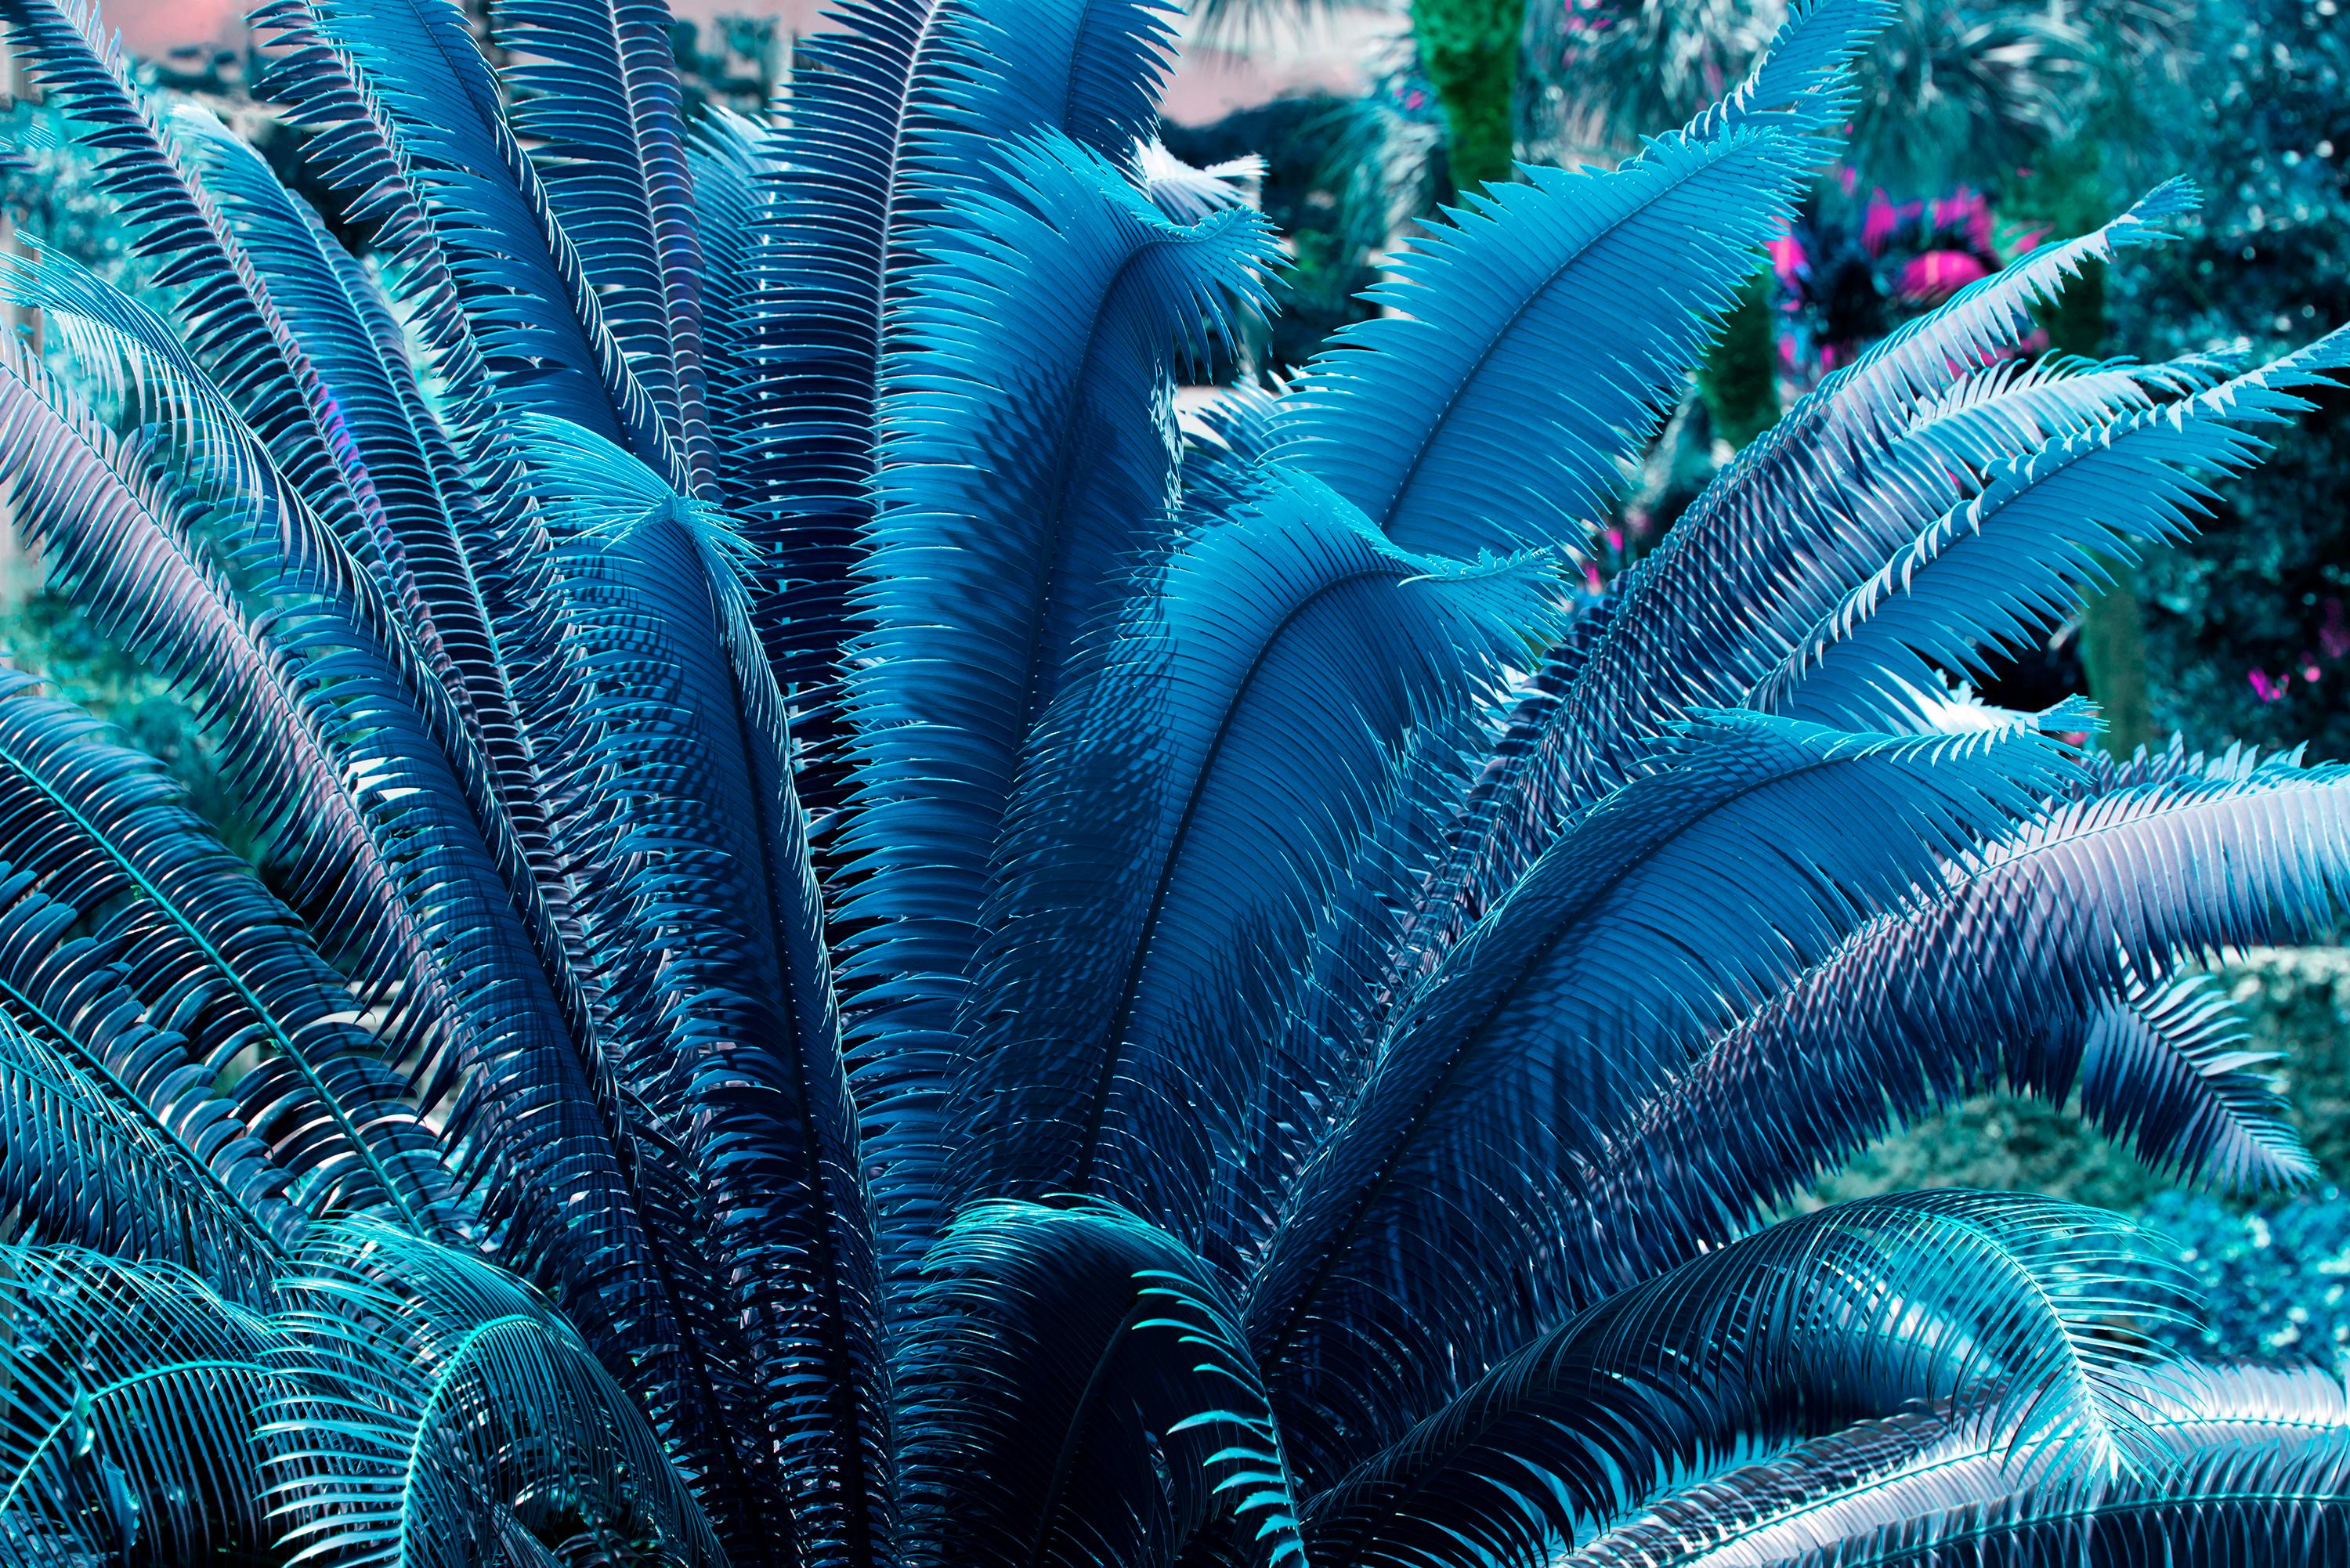 Abstract Photograph Robert Funk - Fernes bleus et une charnière magenta Jardin de sculptures